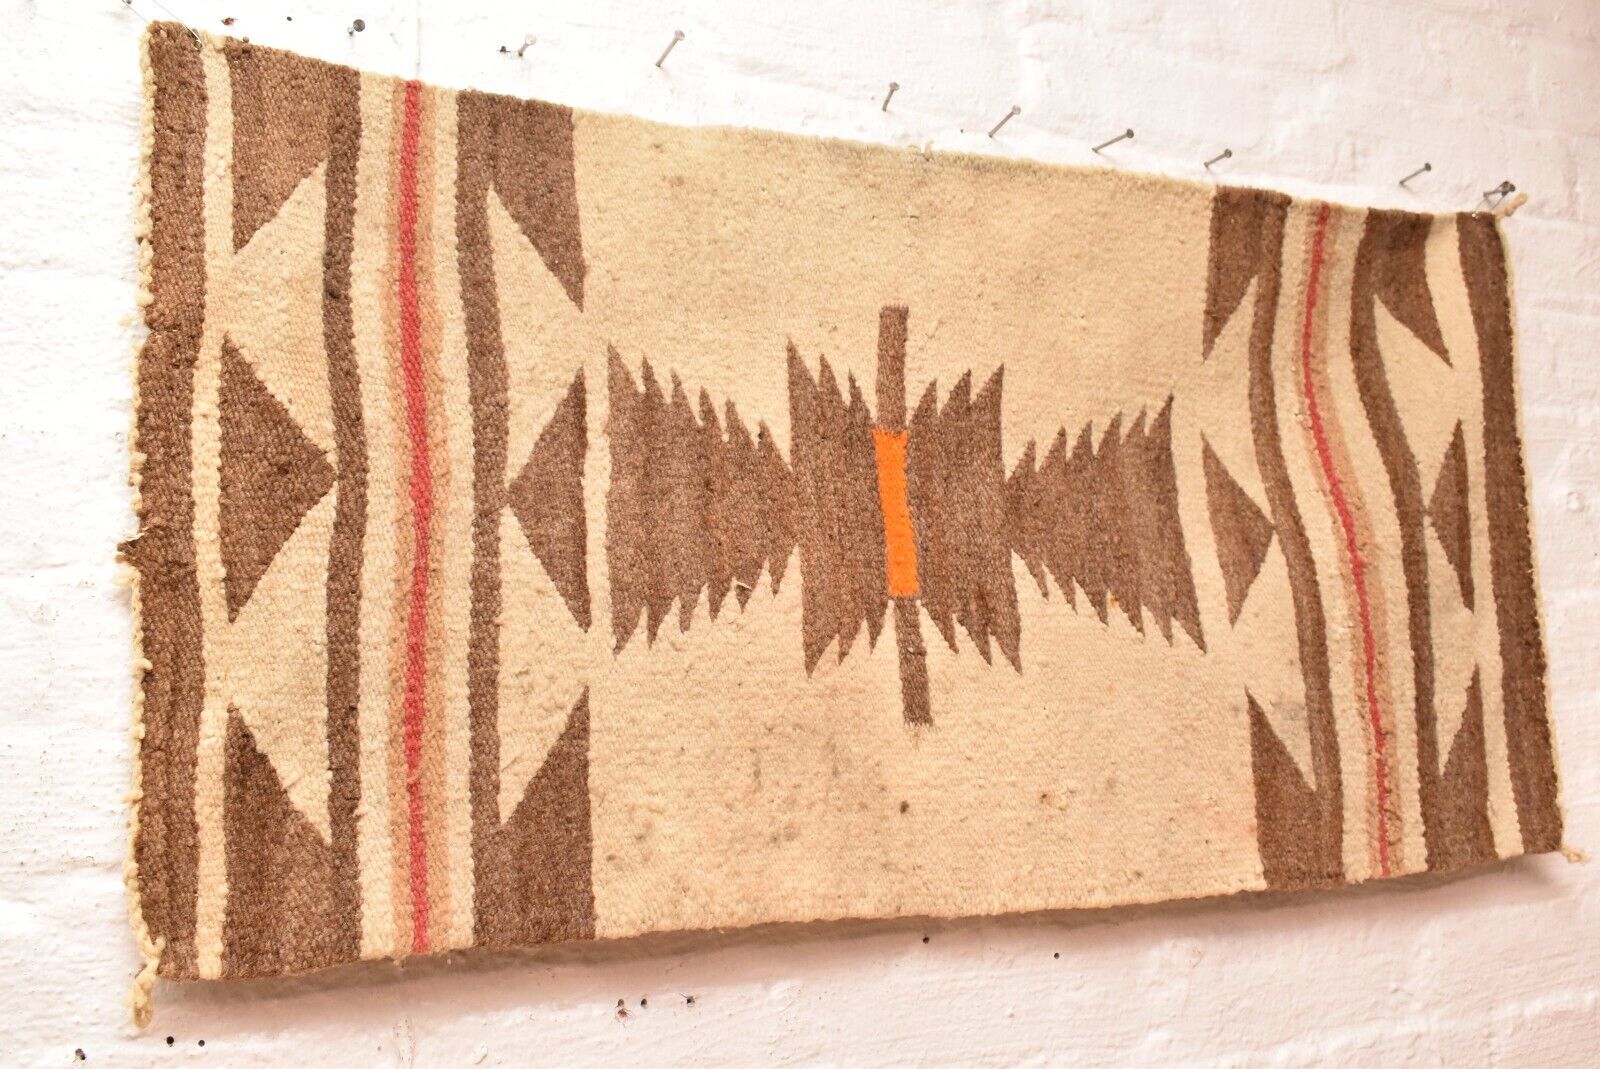 Antique Navajo Rug Native American Indian 35x18 Textile Weaving Vintage